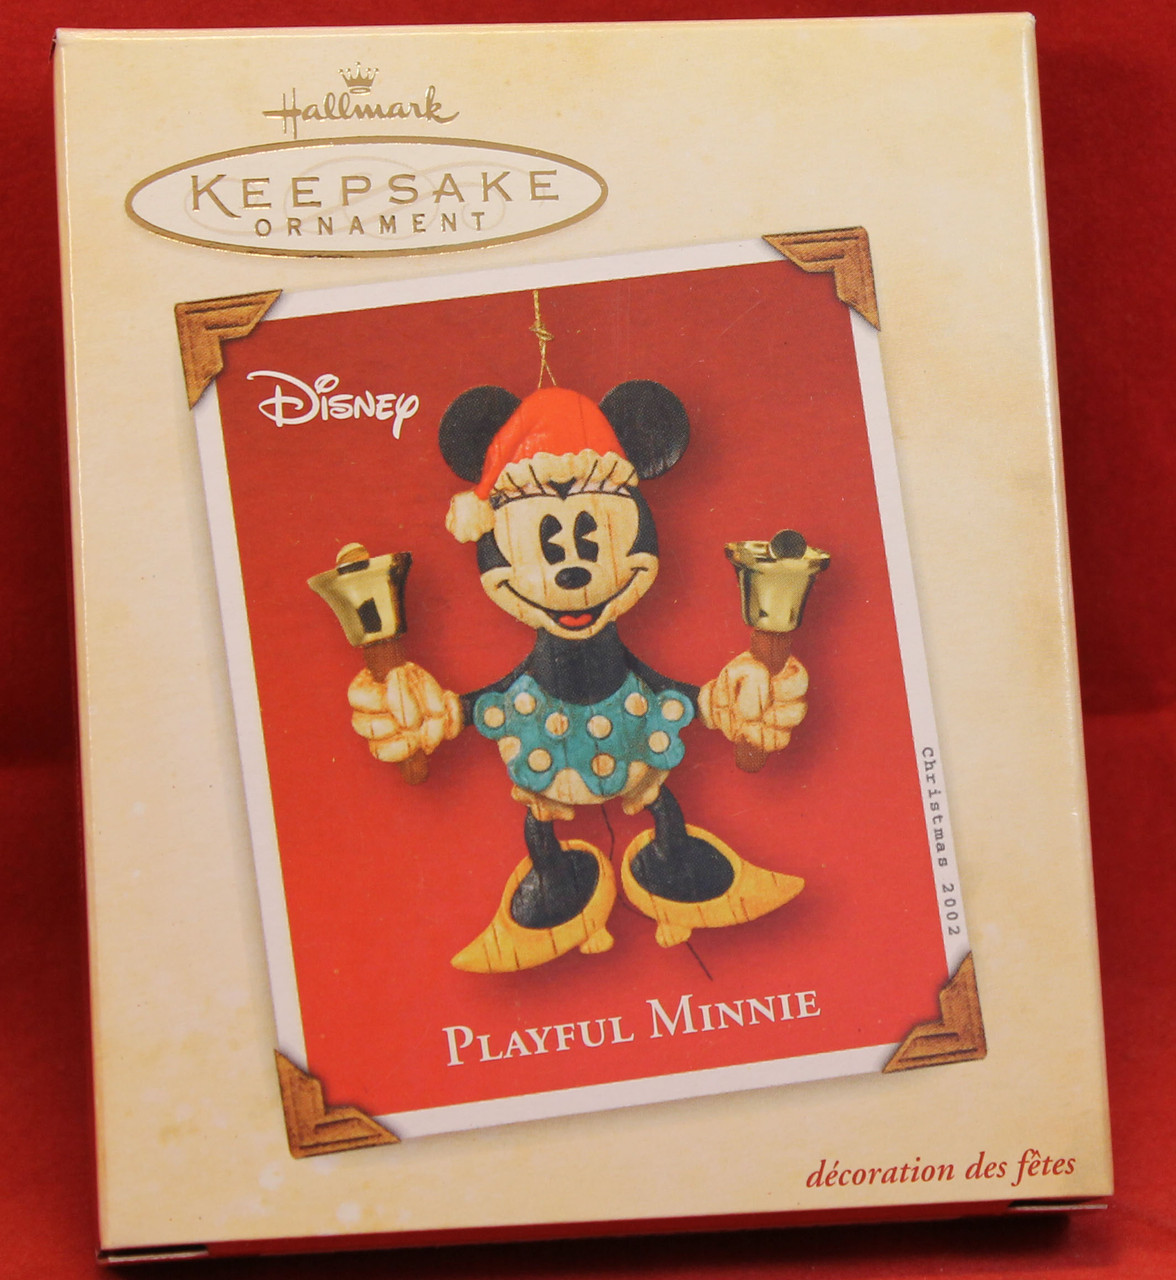 Disney Christmas Ornament - Playful Minnie